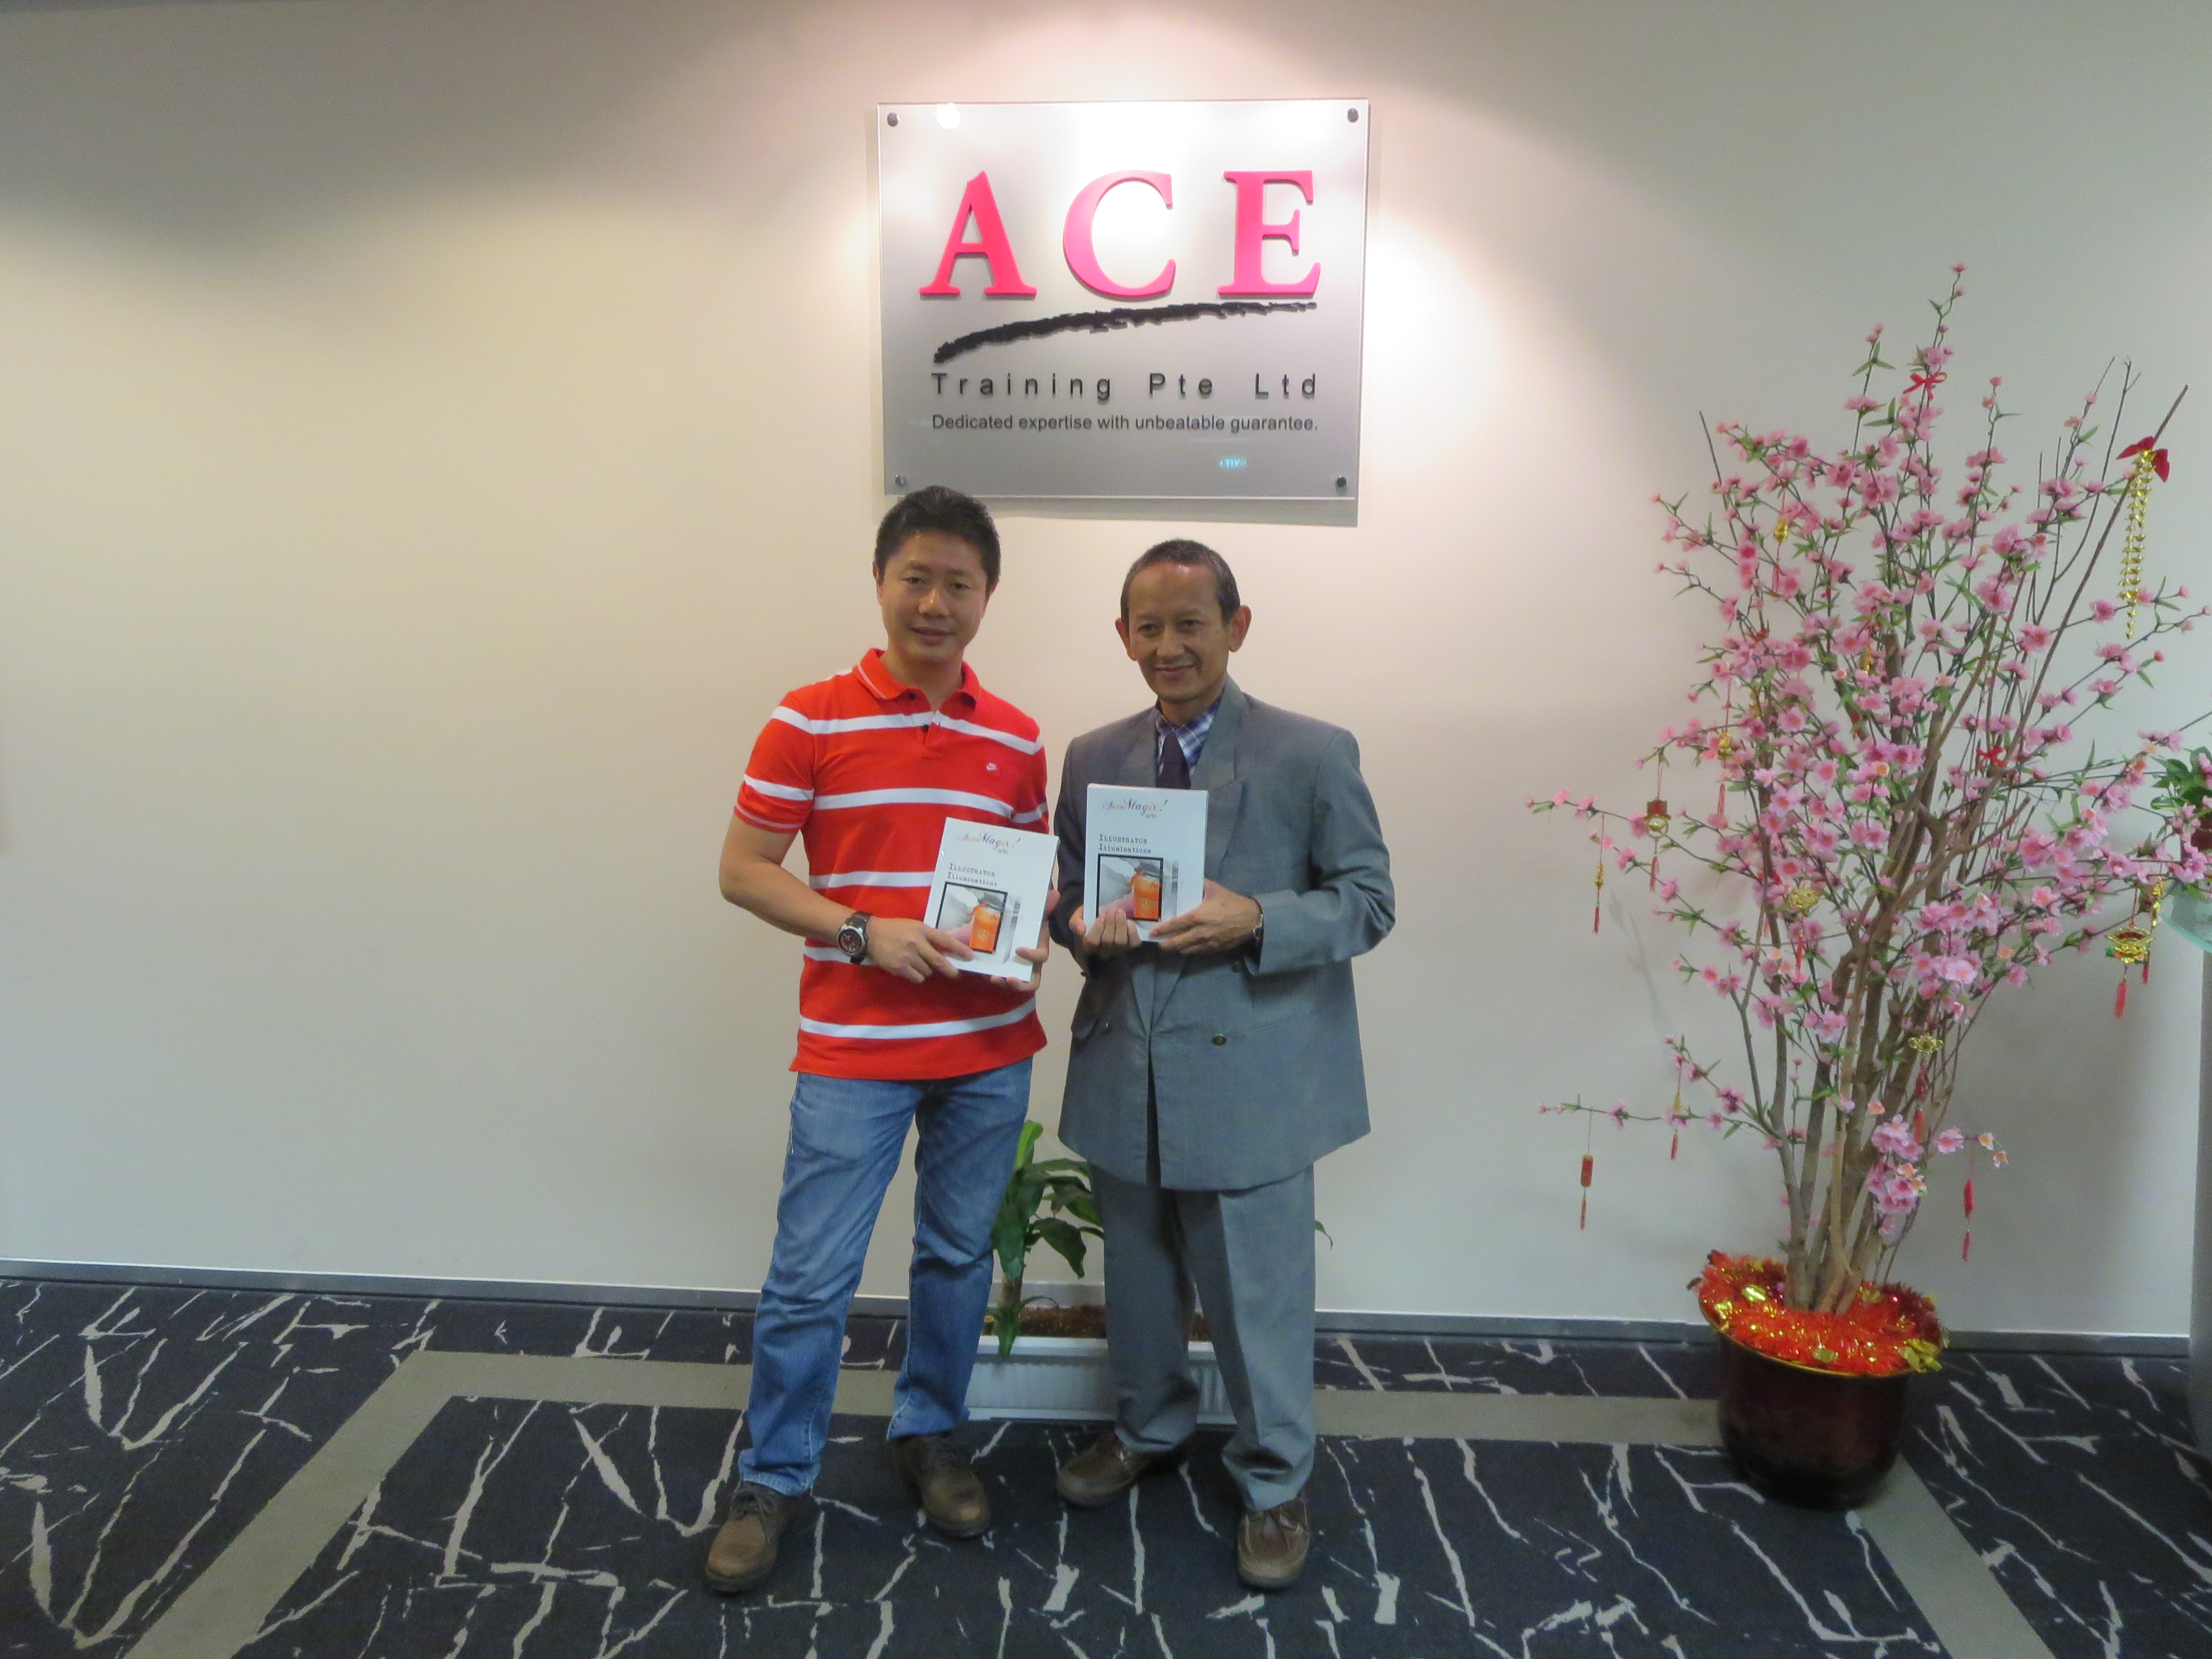 ACE Training Pte Singapore